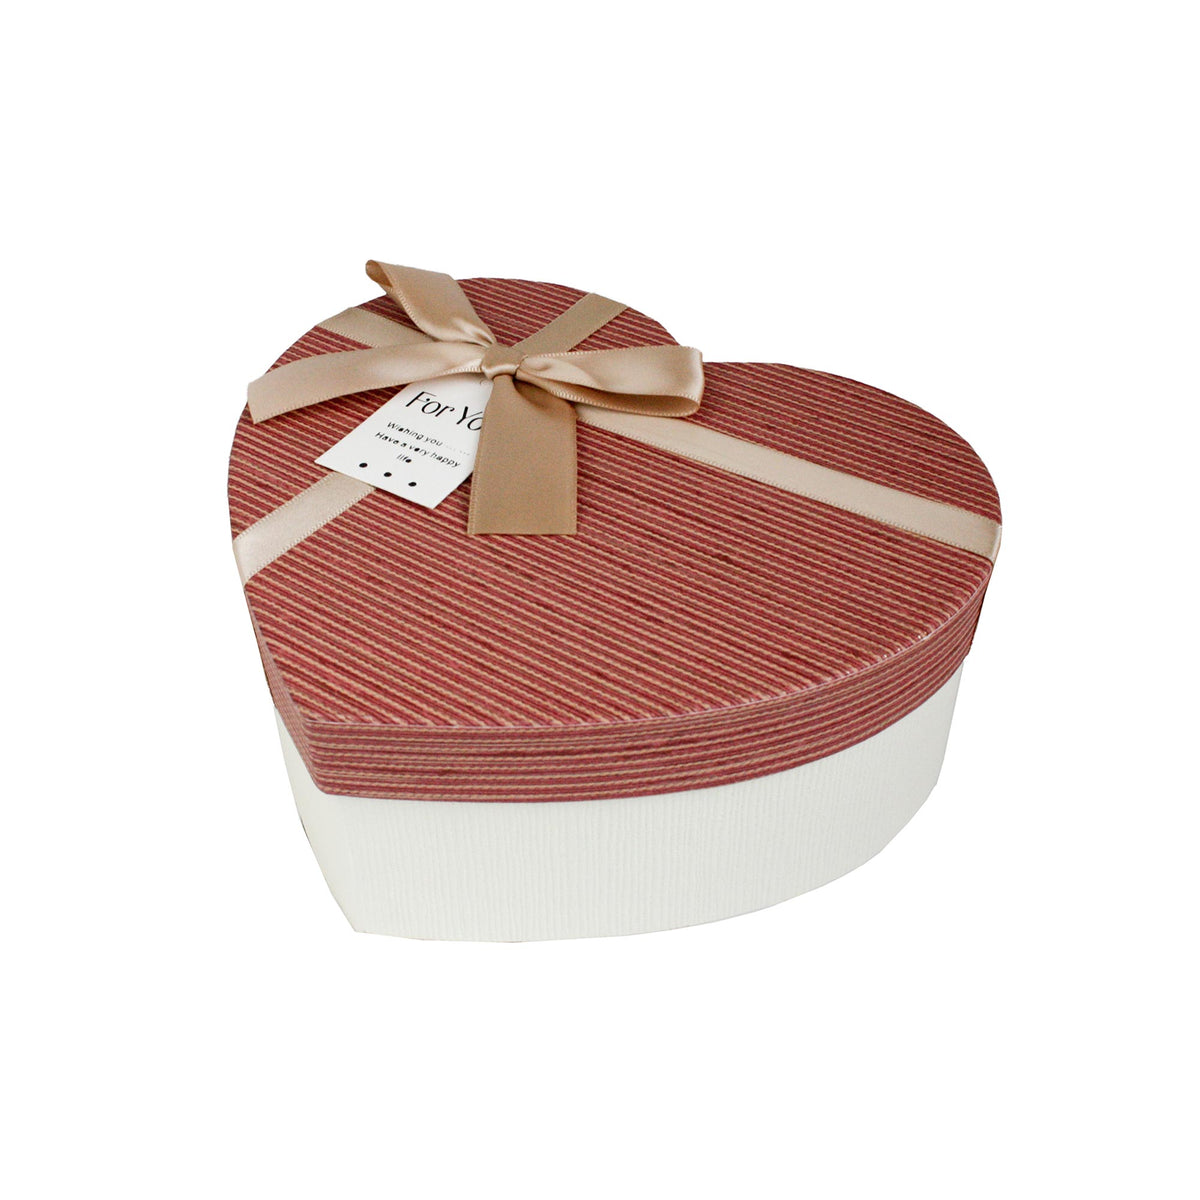 Single Cream/Burgundy Gift Box with Cream Satin Ribbon